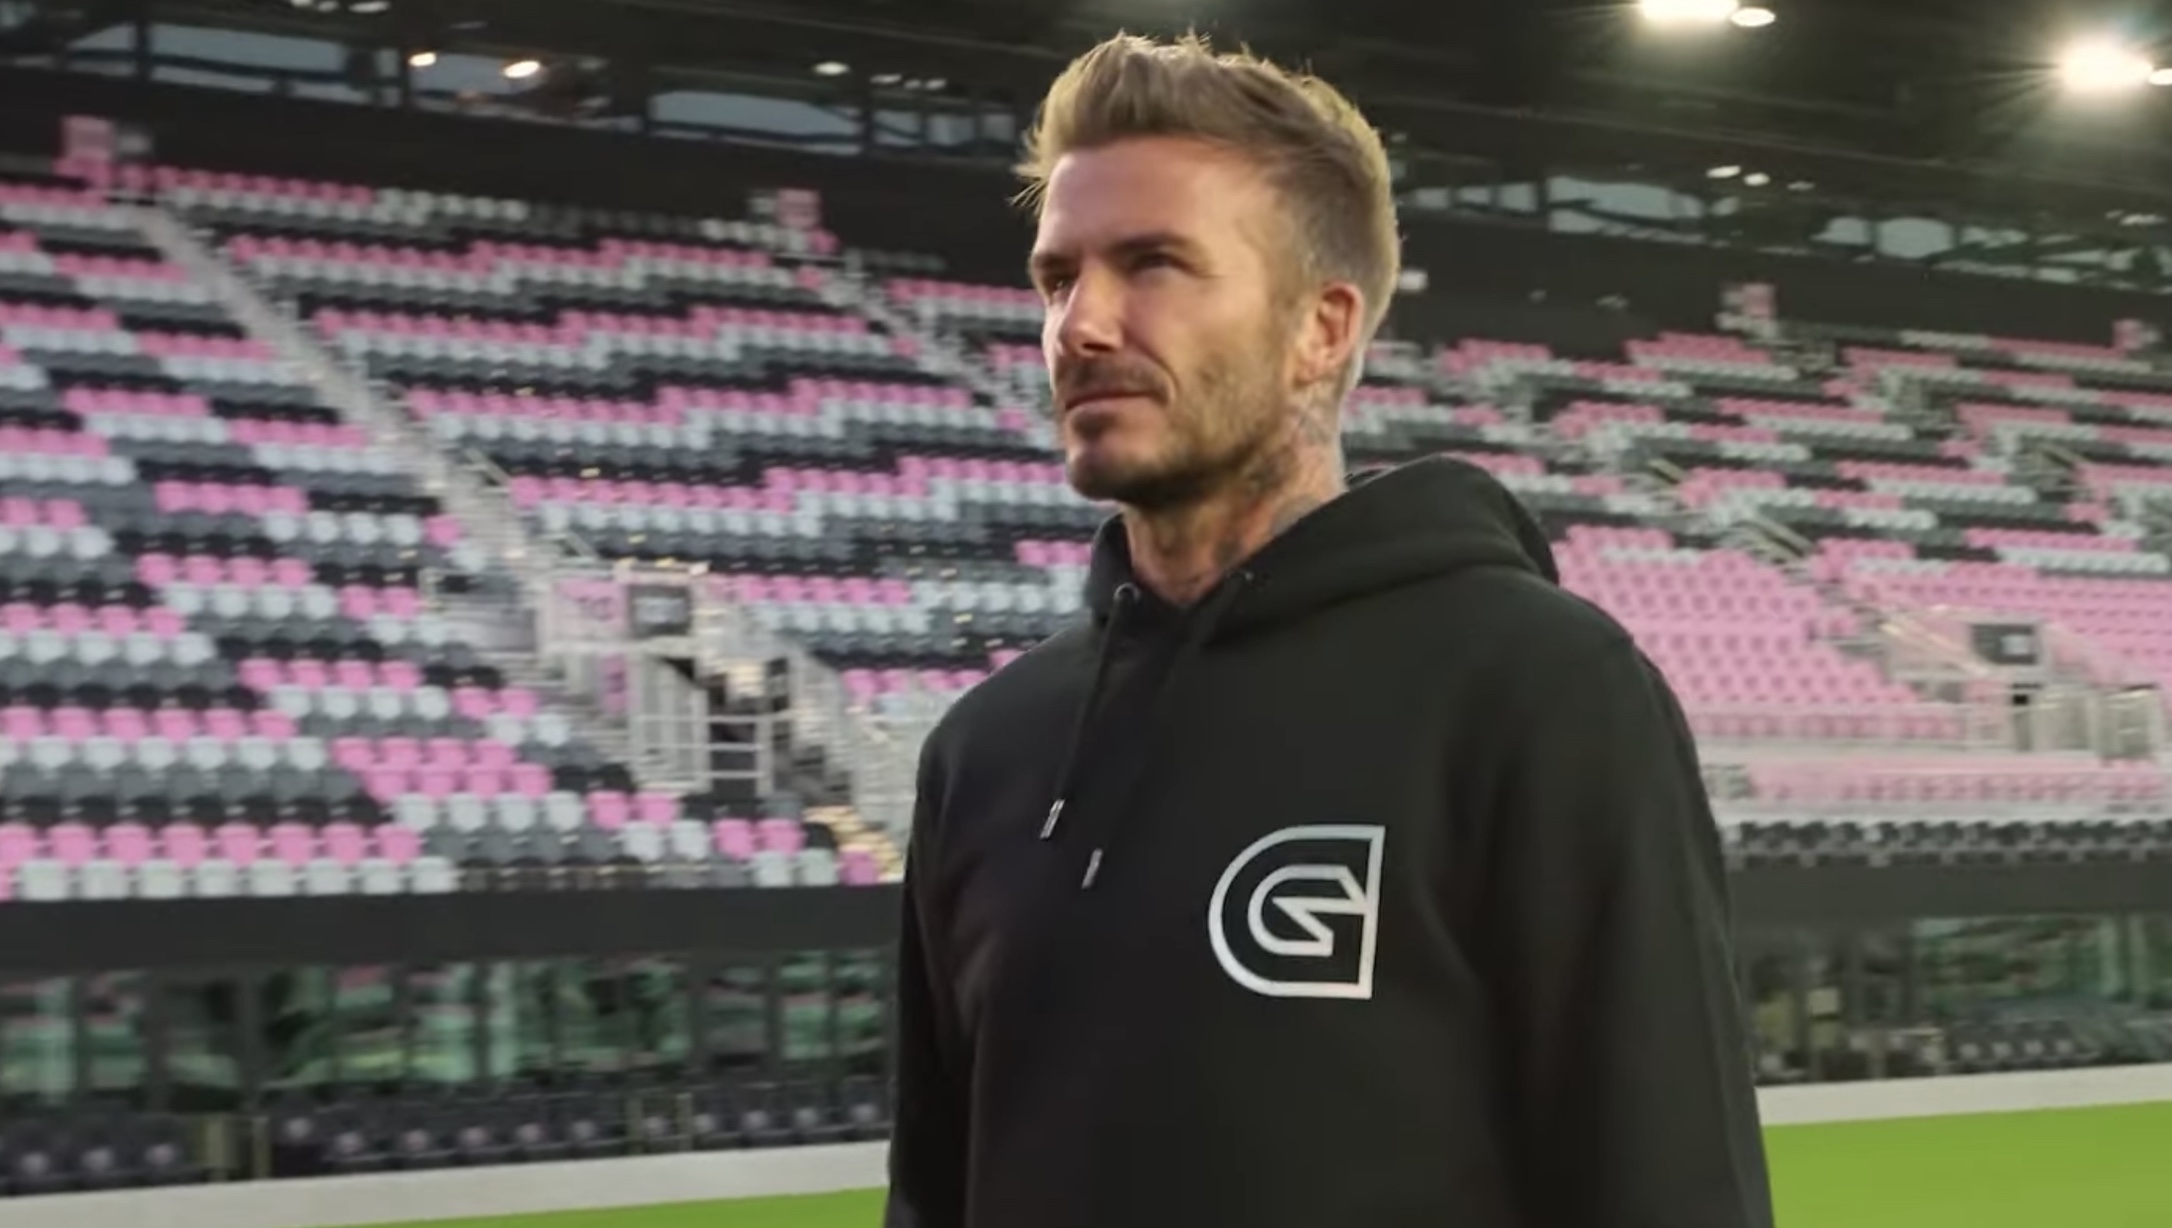 David Beckham in Ralph Lauren for Inter Miami CF